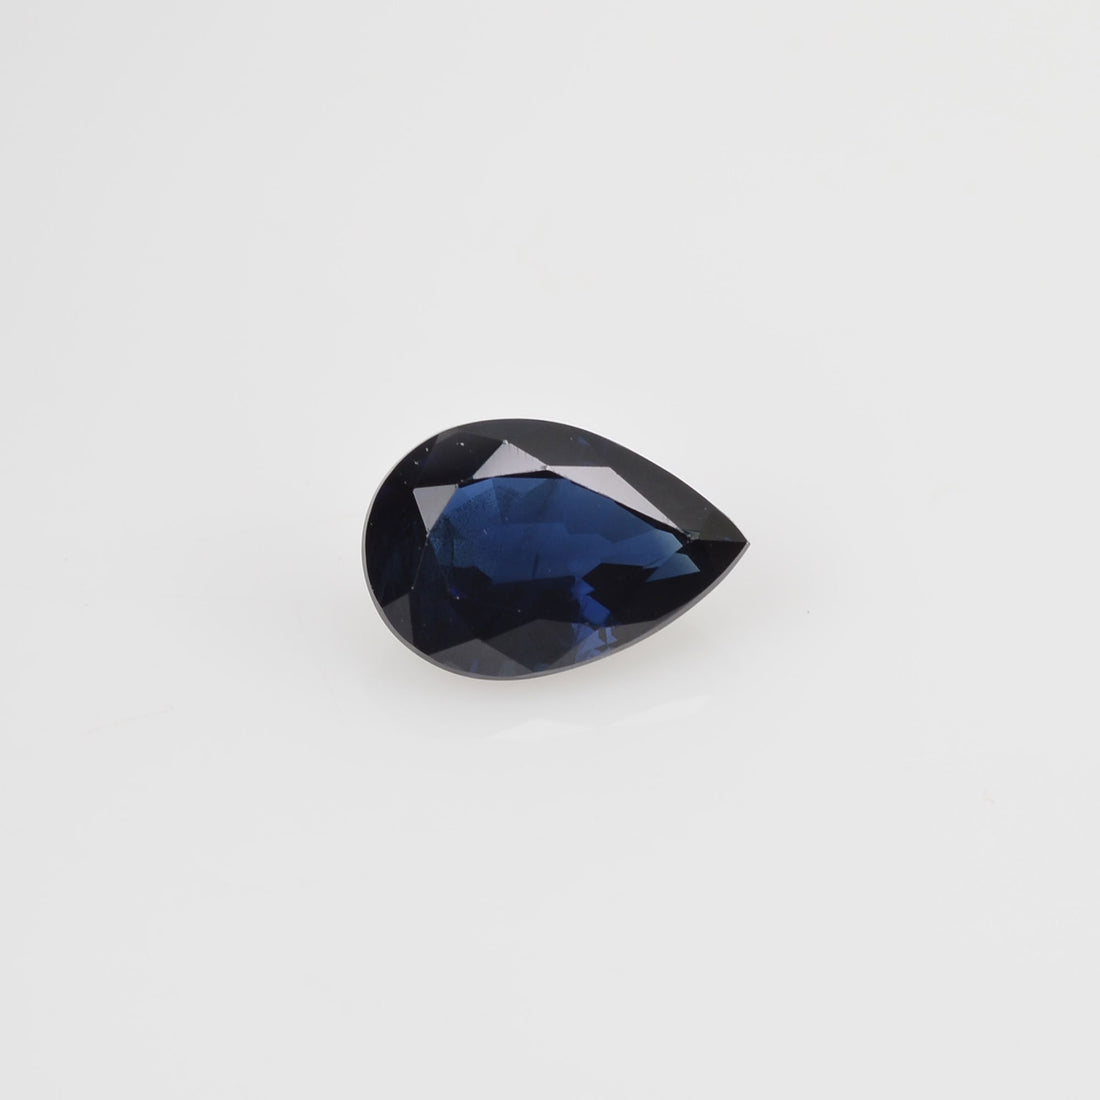 0.78 cts Natural Blue Sapphire Loose Gemstone Pear Cut